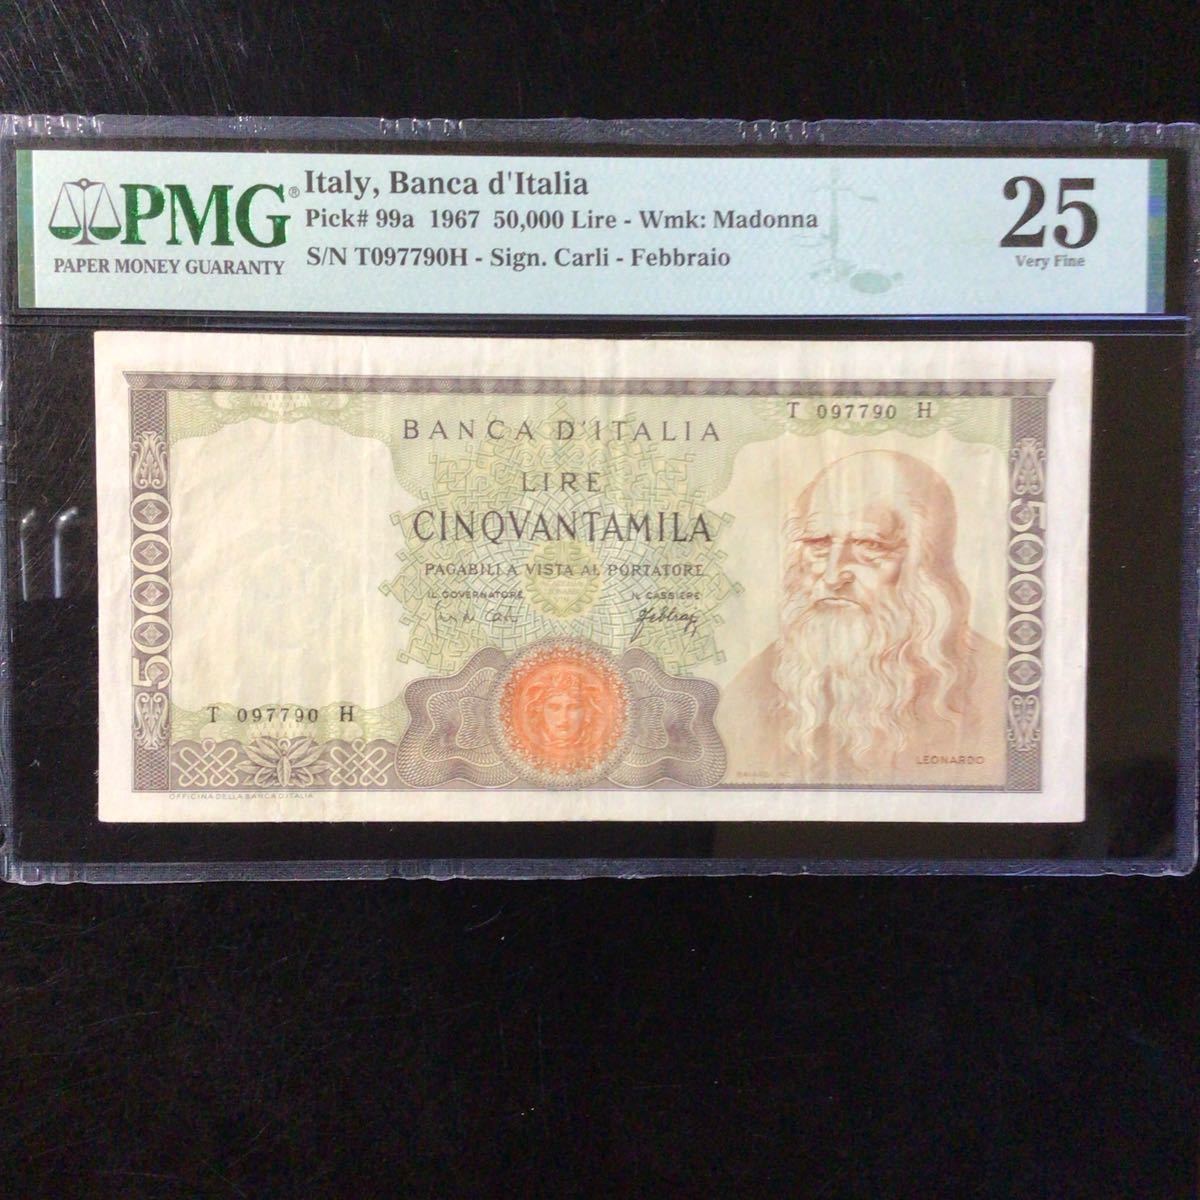 World Banknote Grading ITALY《Banca d'Italia》50000 Lire【1967】『PMG Grading Very Fine 25』